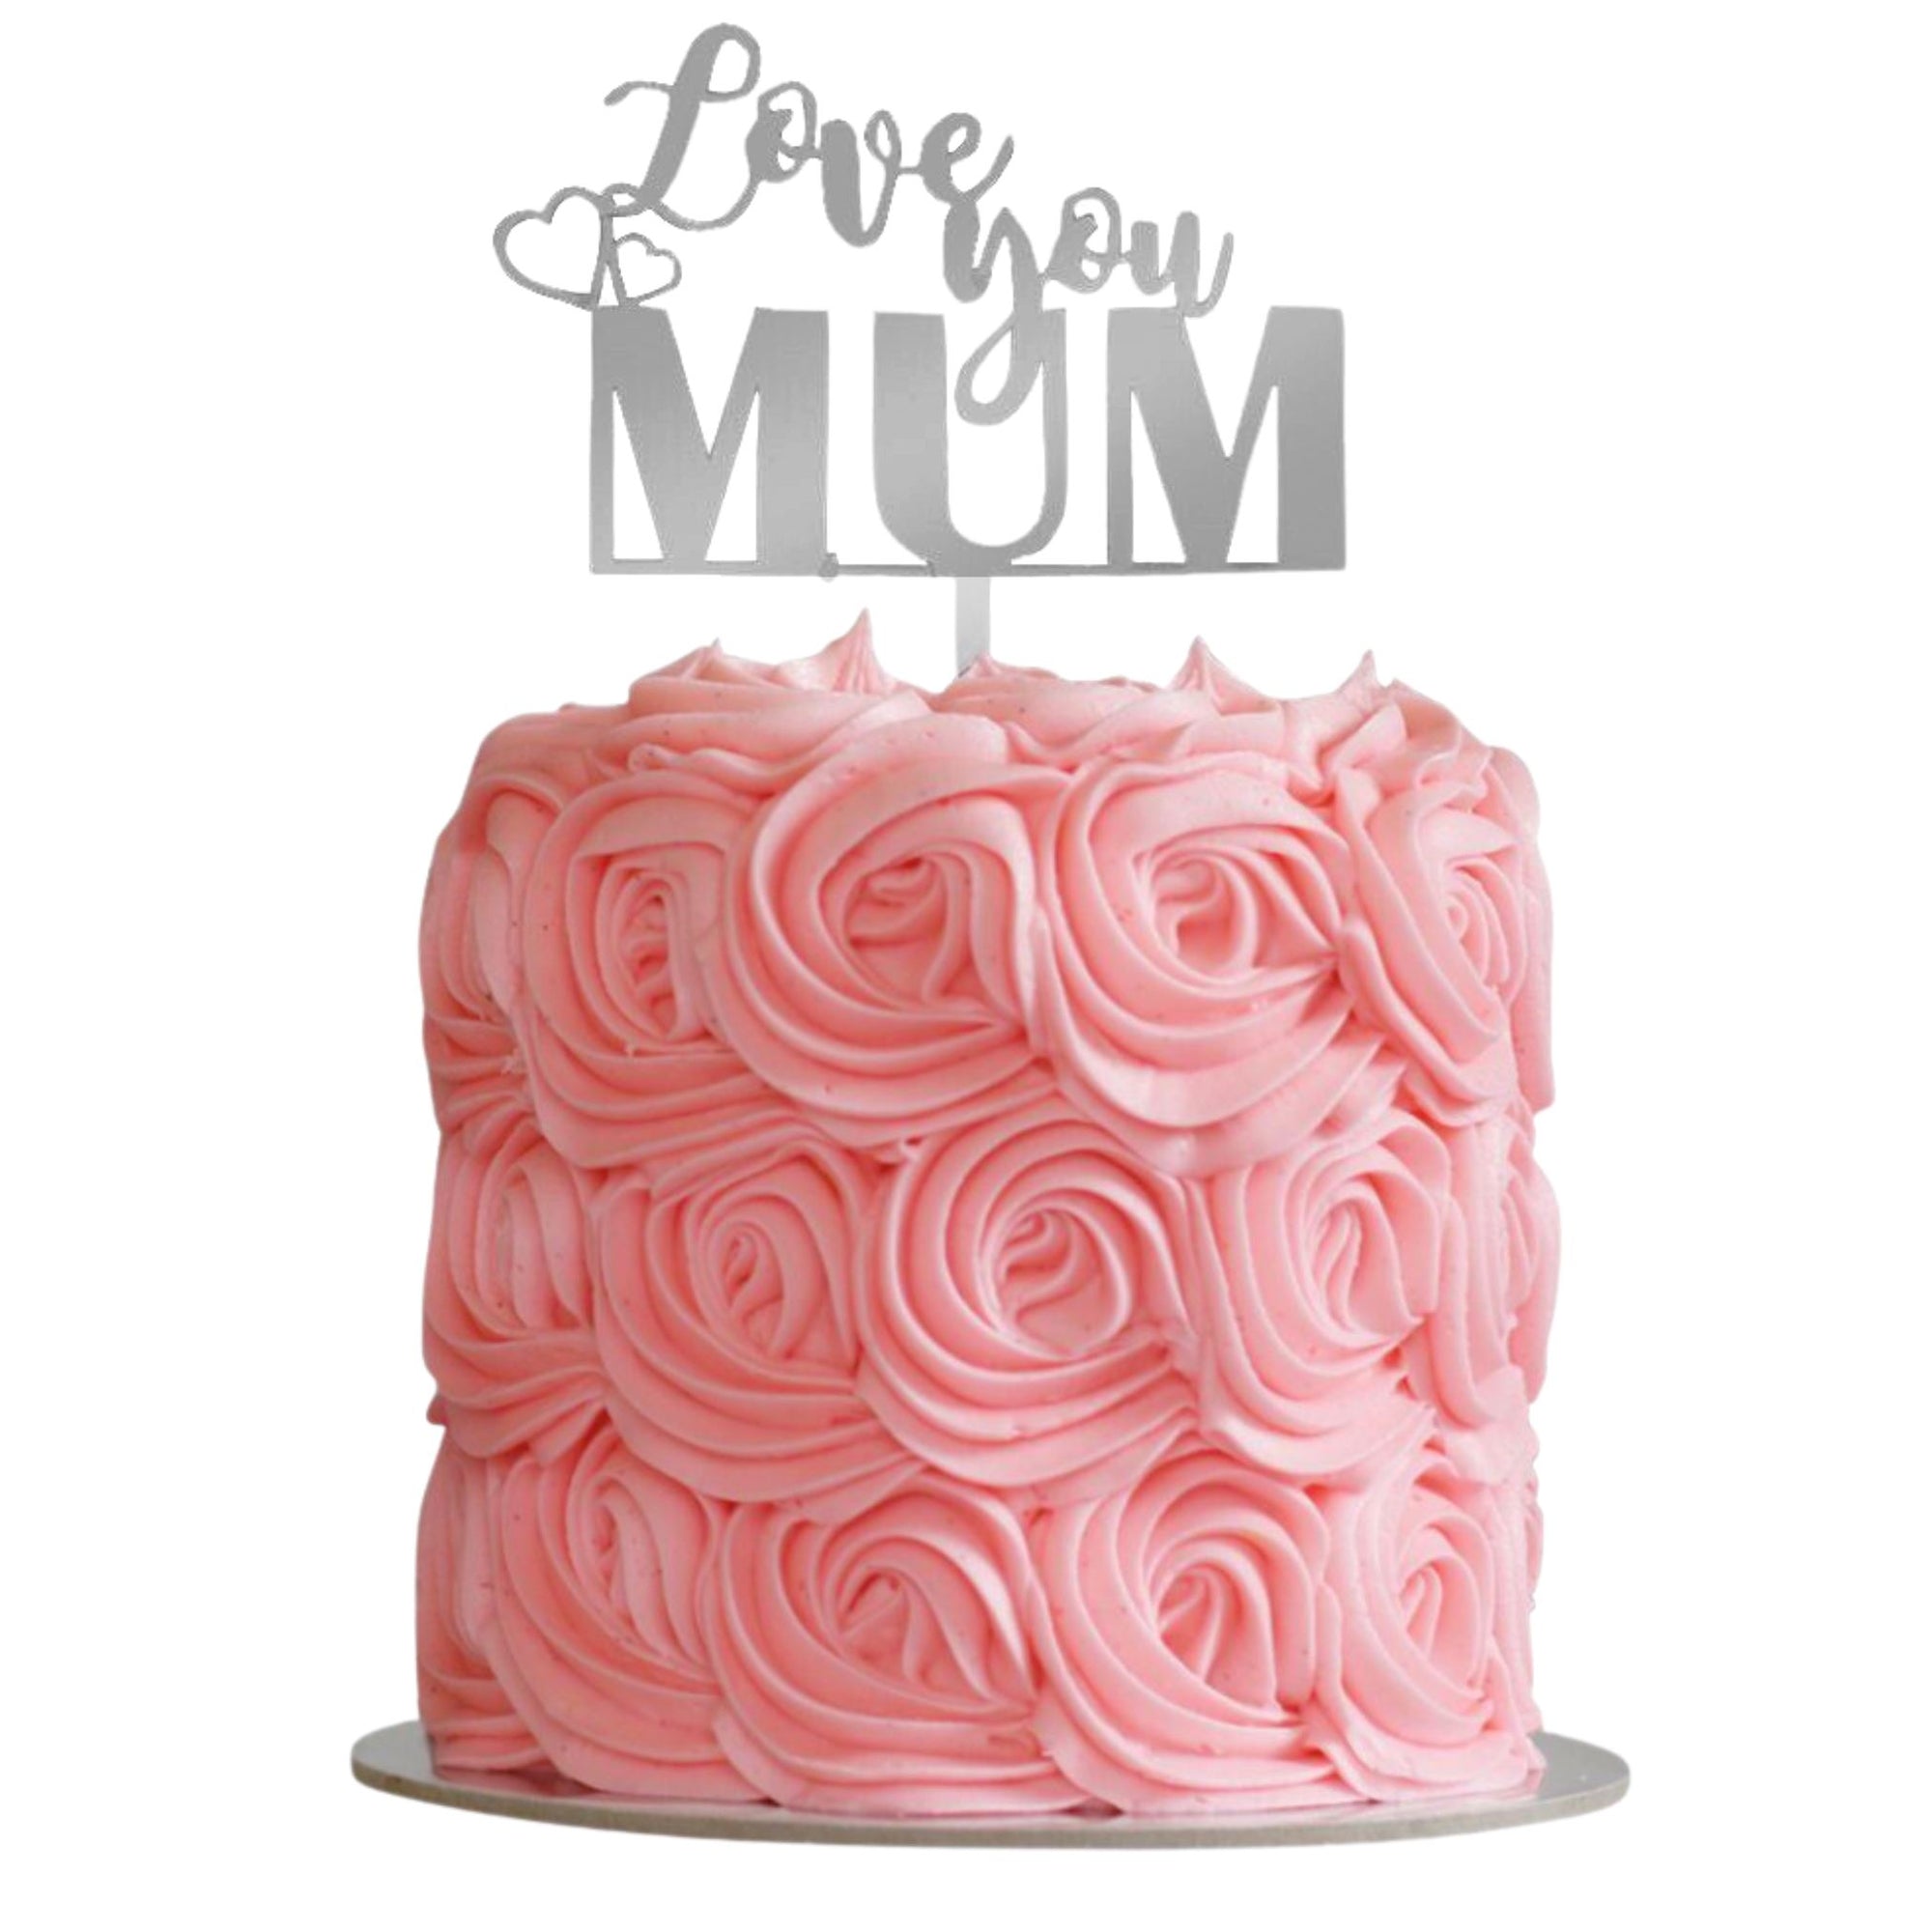 I Love You Mum Cake Cakes The Cupcake Queens 